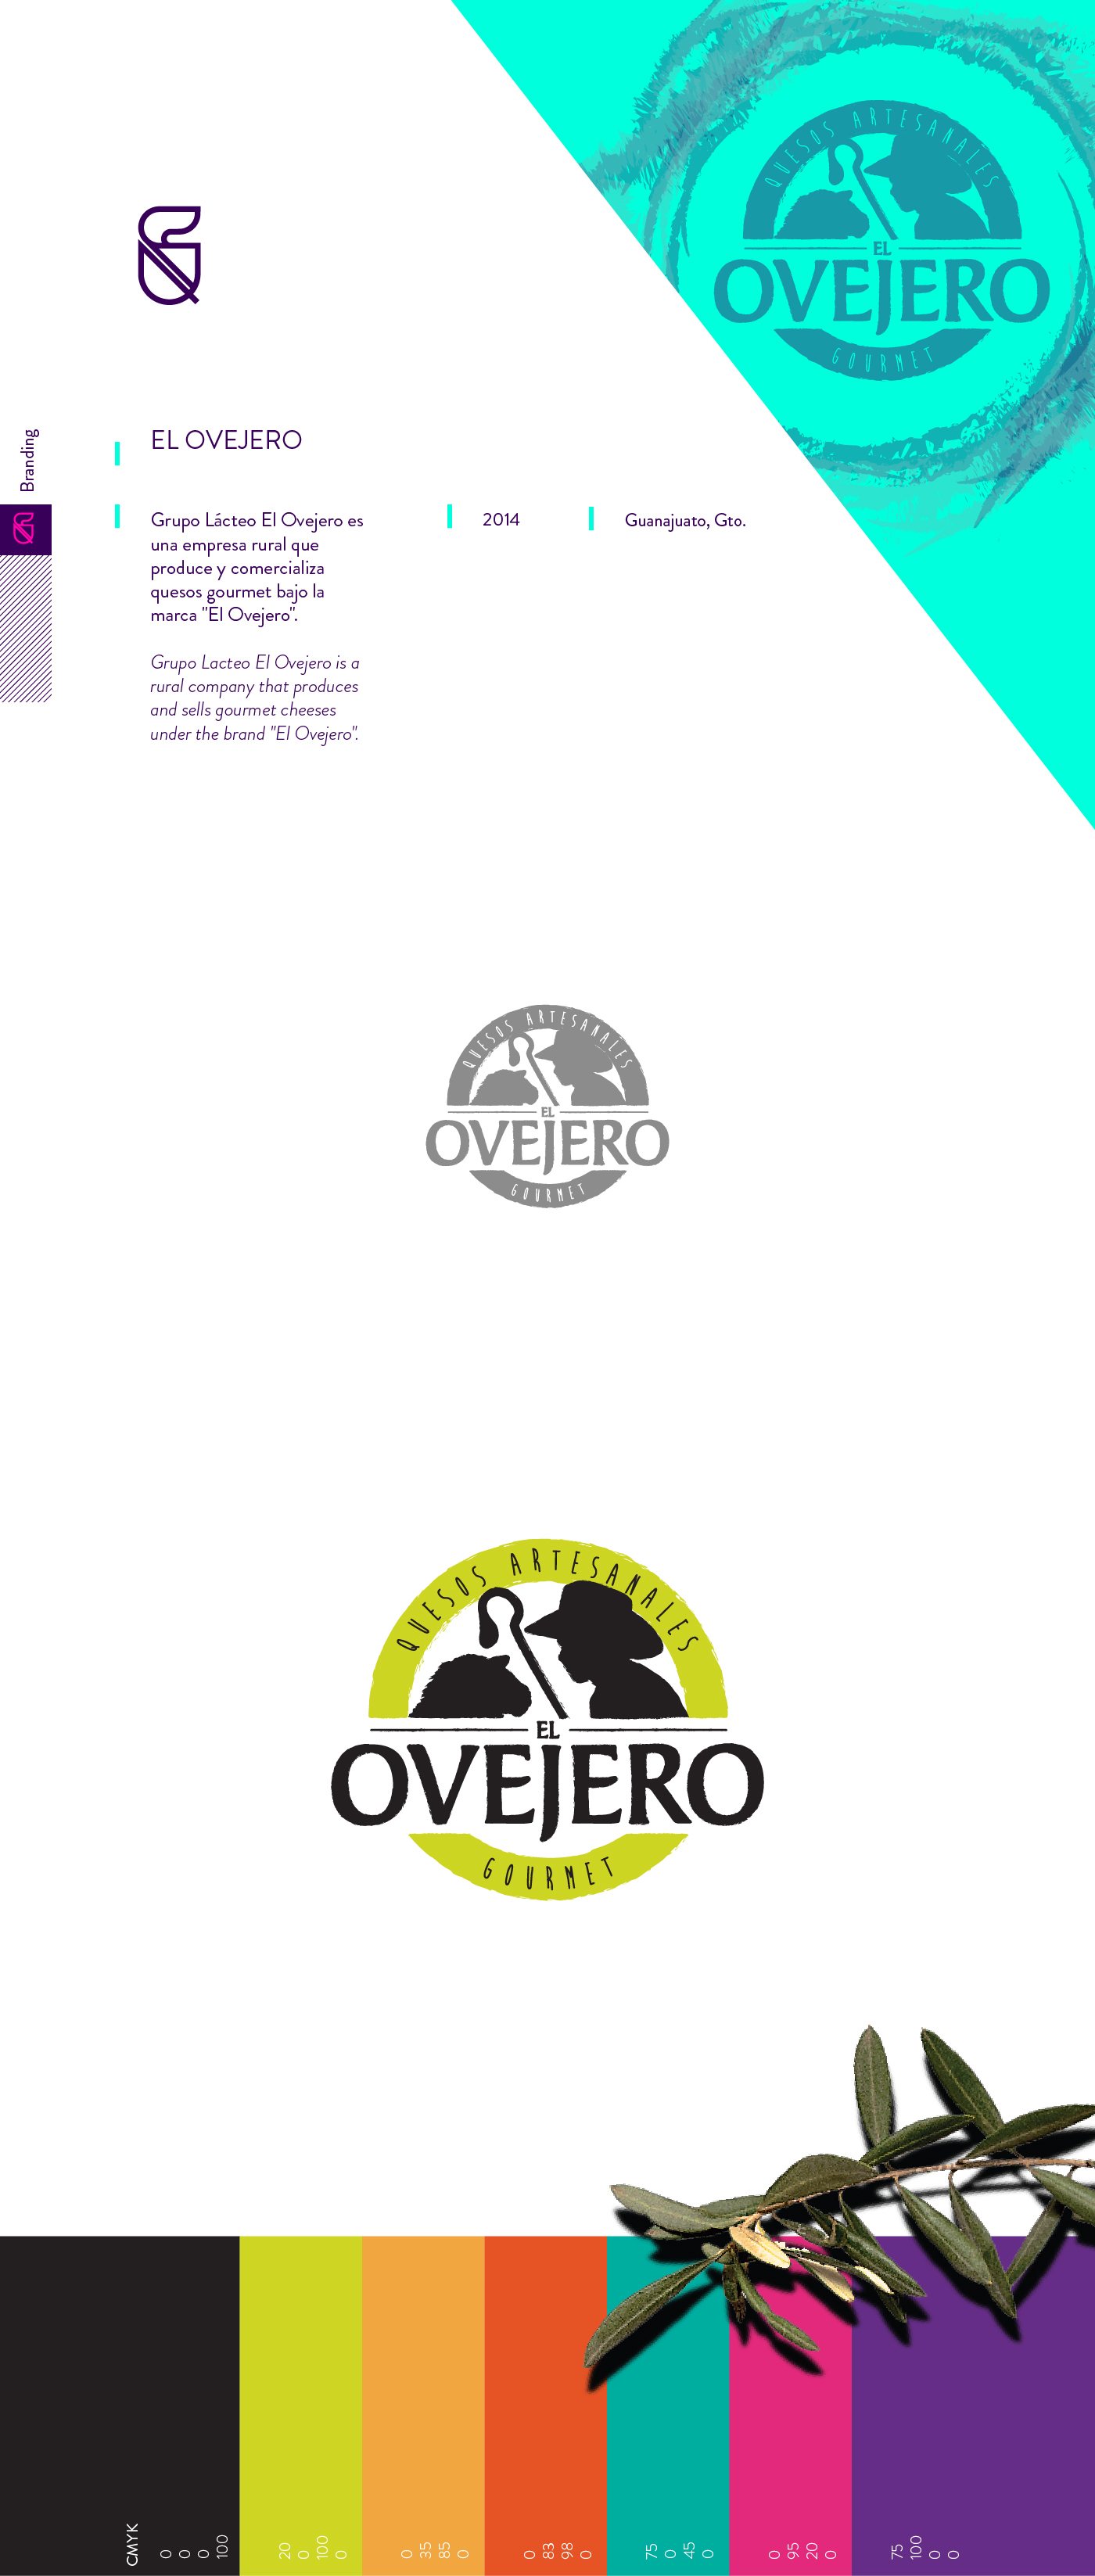 tonic logo Queretaro identity mexico Cheese gourmet brand rural